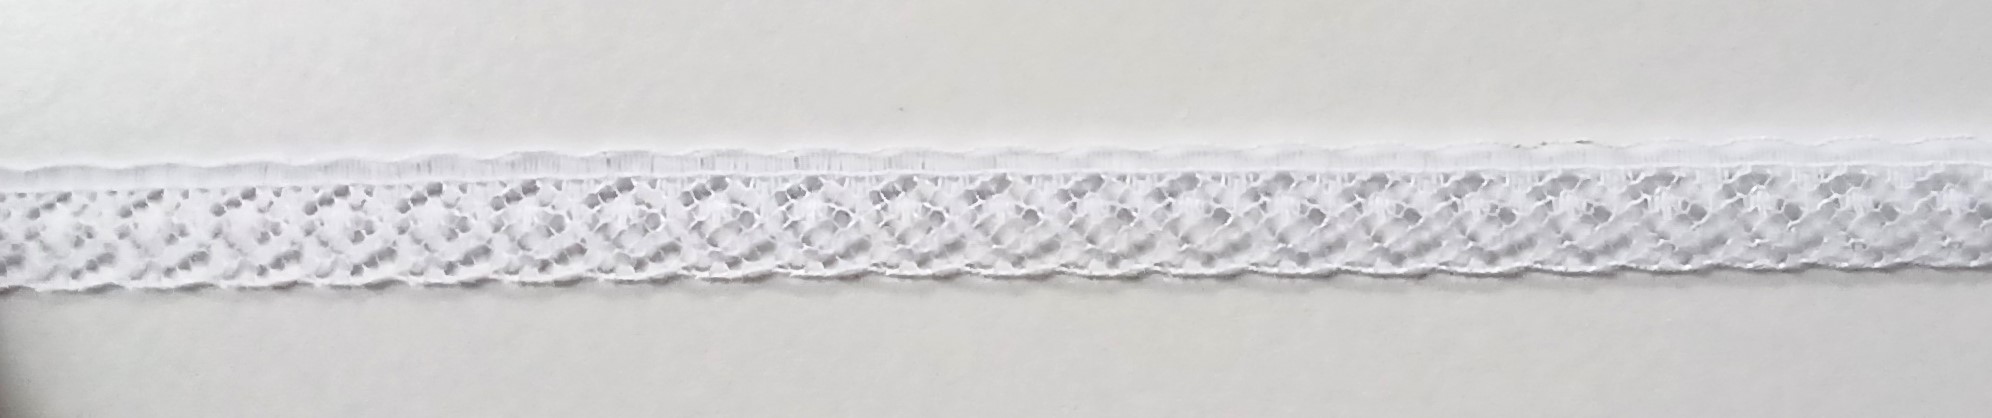 White 1/2" Nylon Lace